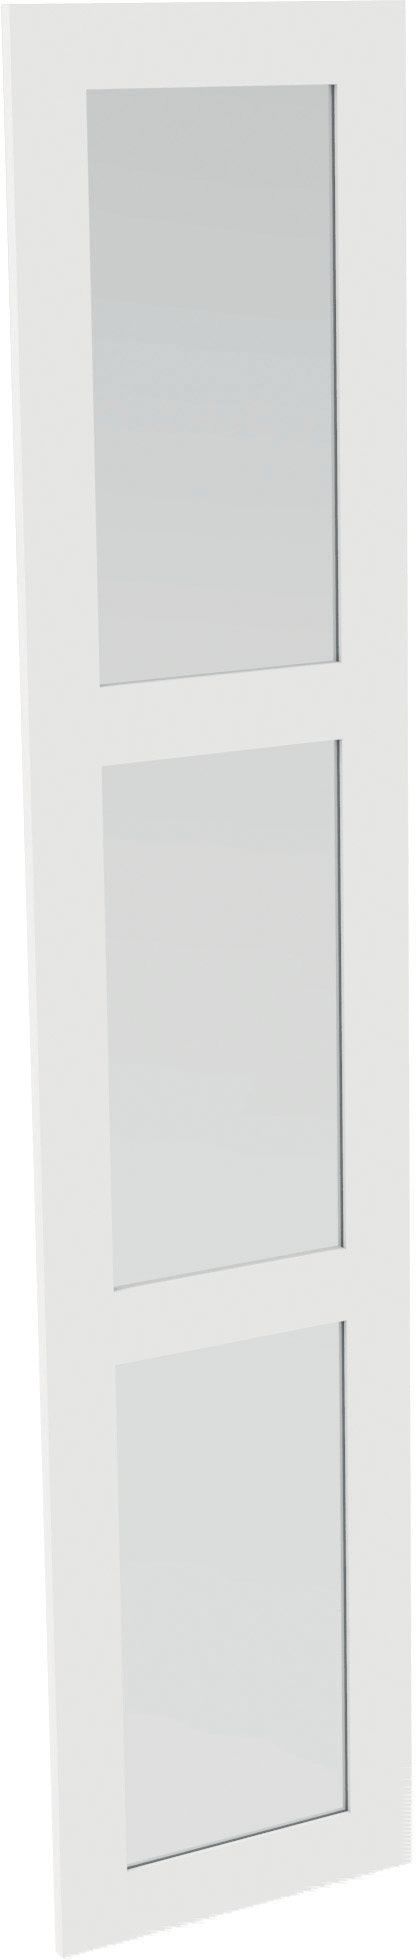 Form Darwin Shaker White Glass Wardrobe door (H)2356mm (W)500mm